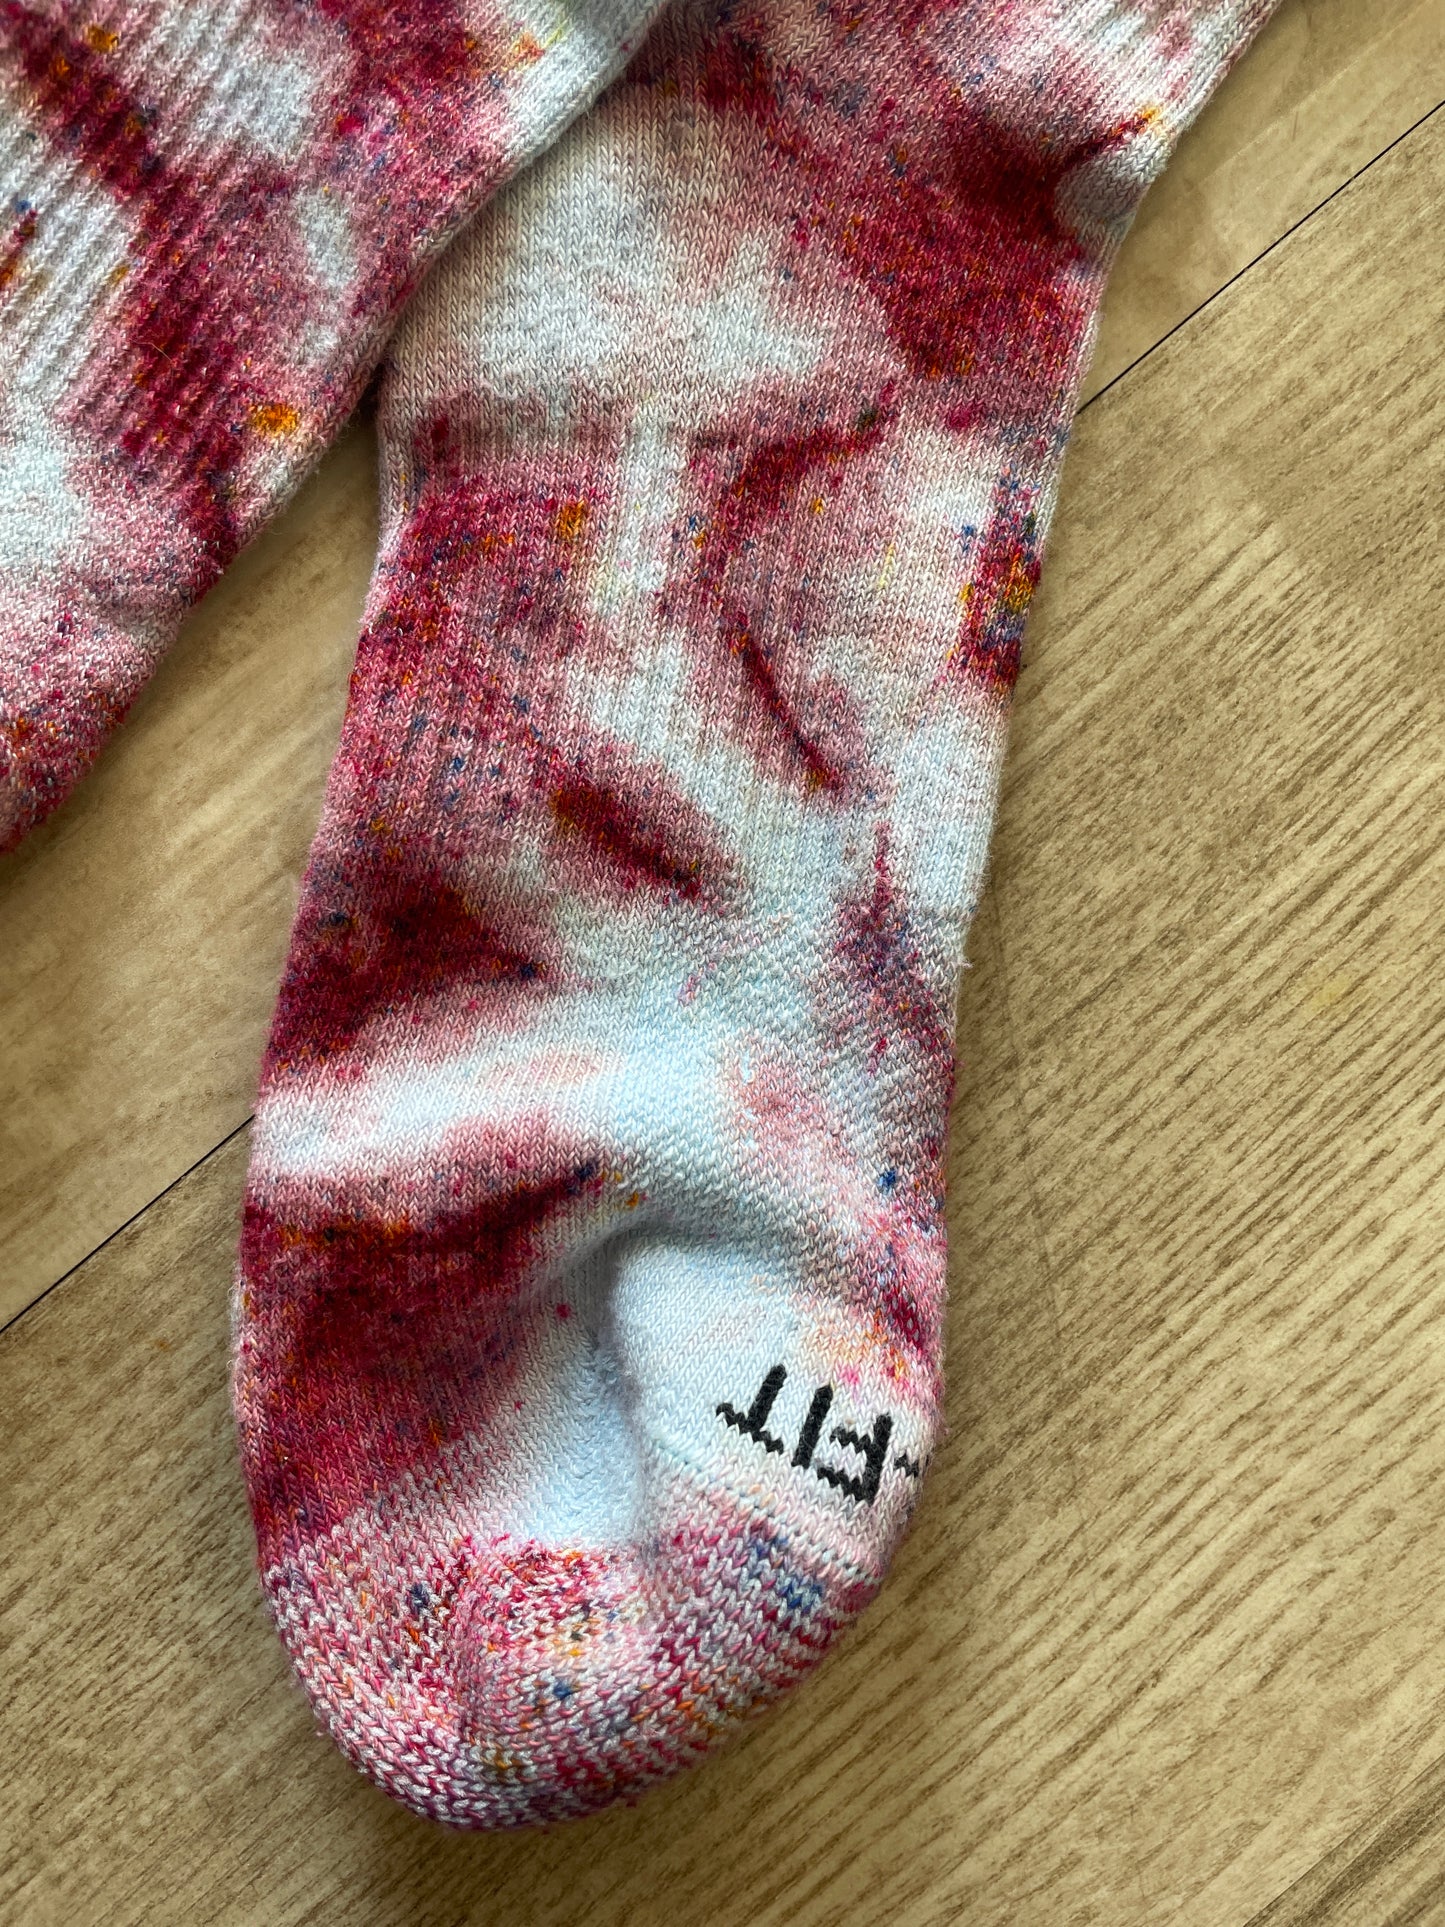 NIKE Socks Hand Tie Dyed Pink and White "Funfetti" Nike Dri-FIT Everyday Plus Crew Training Socks - Size Large (Men's 8-12/Women's 10-13)